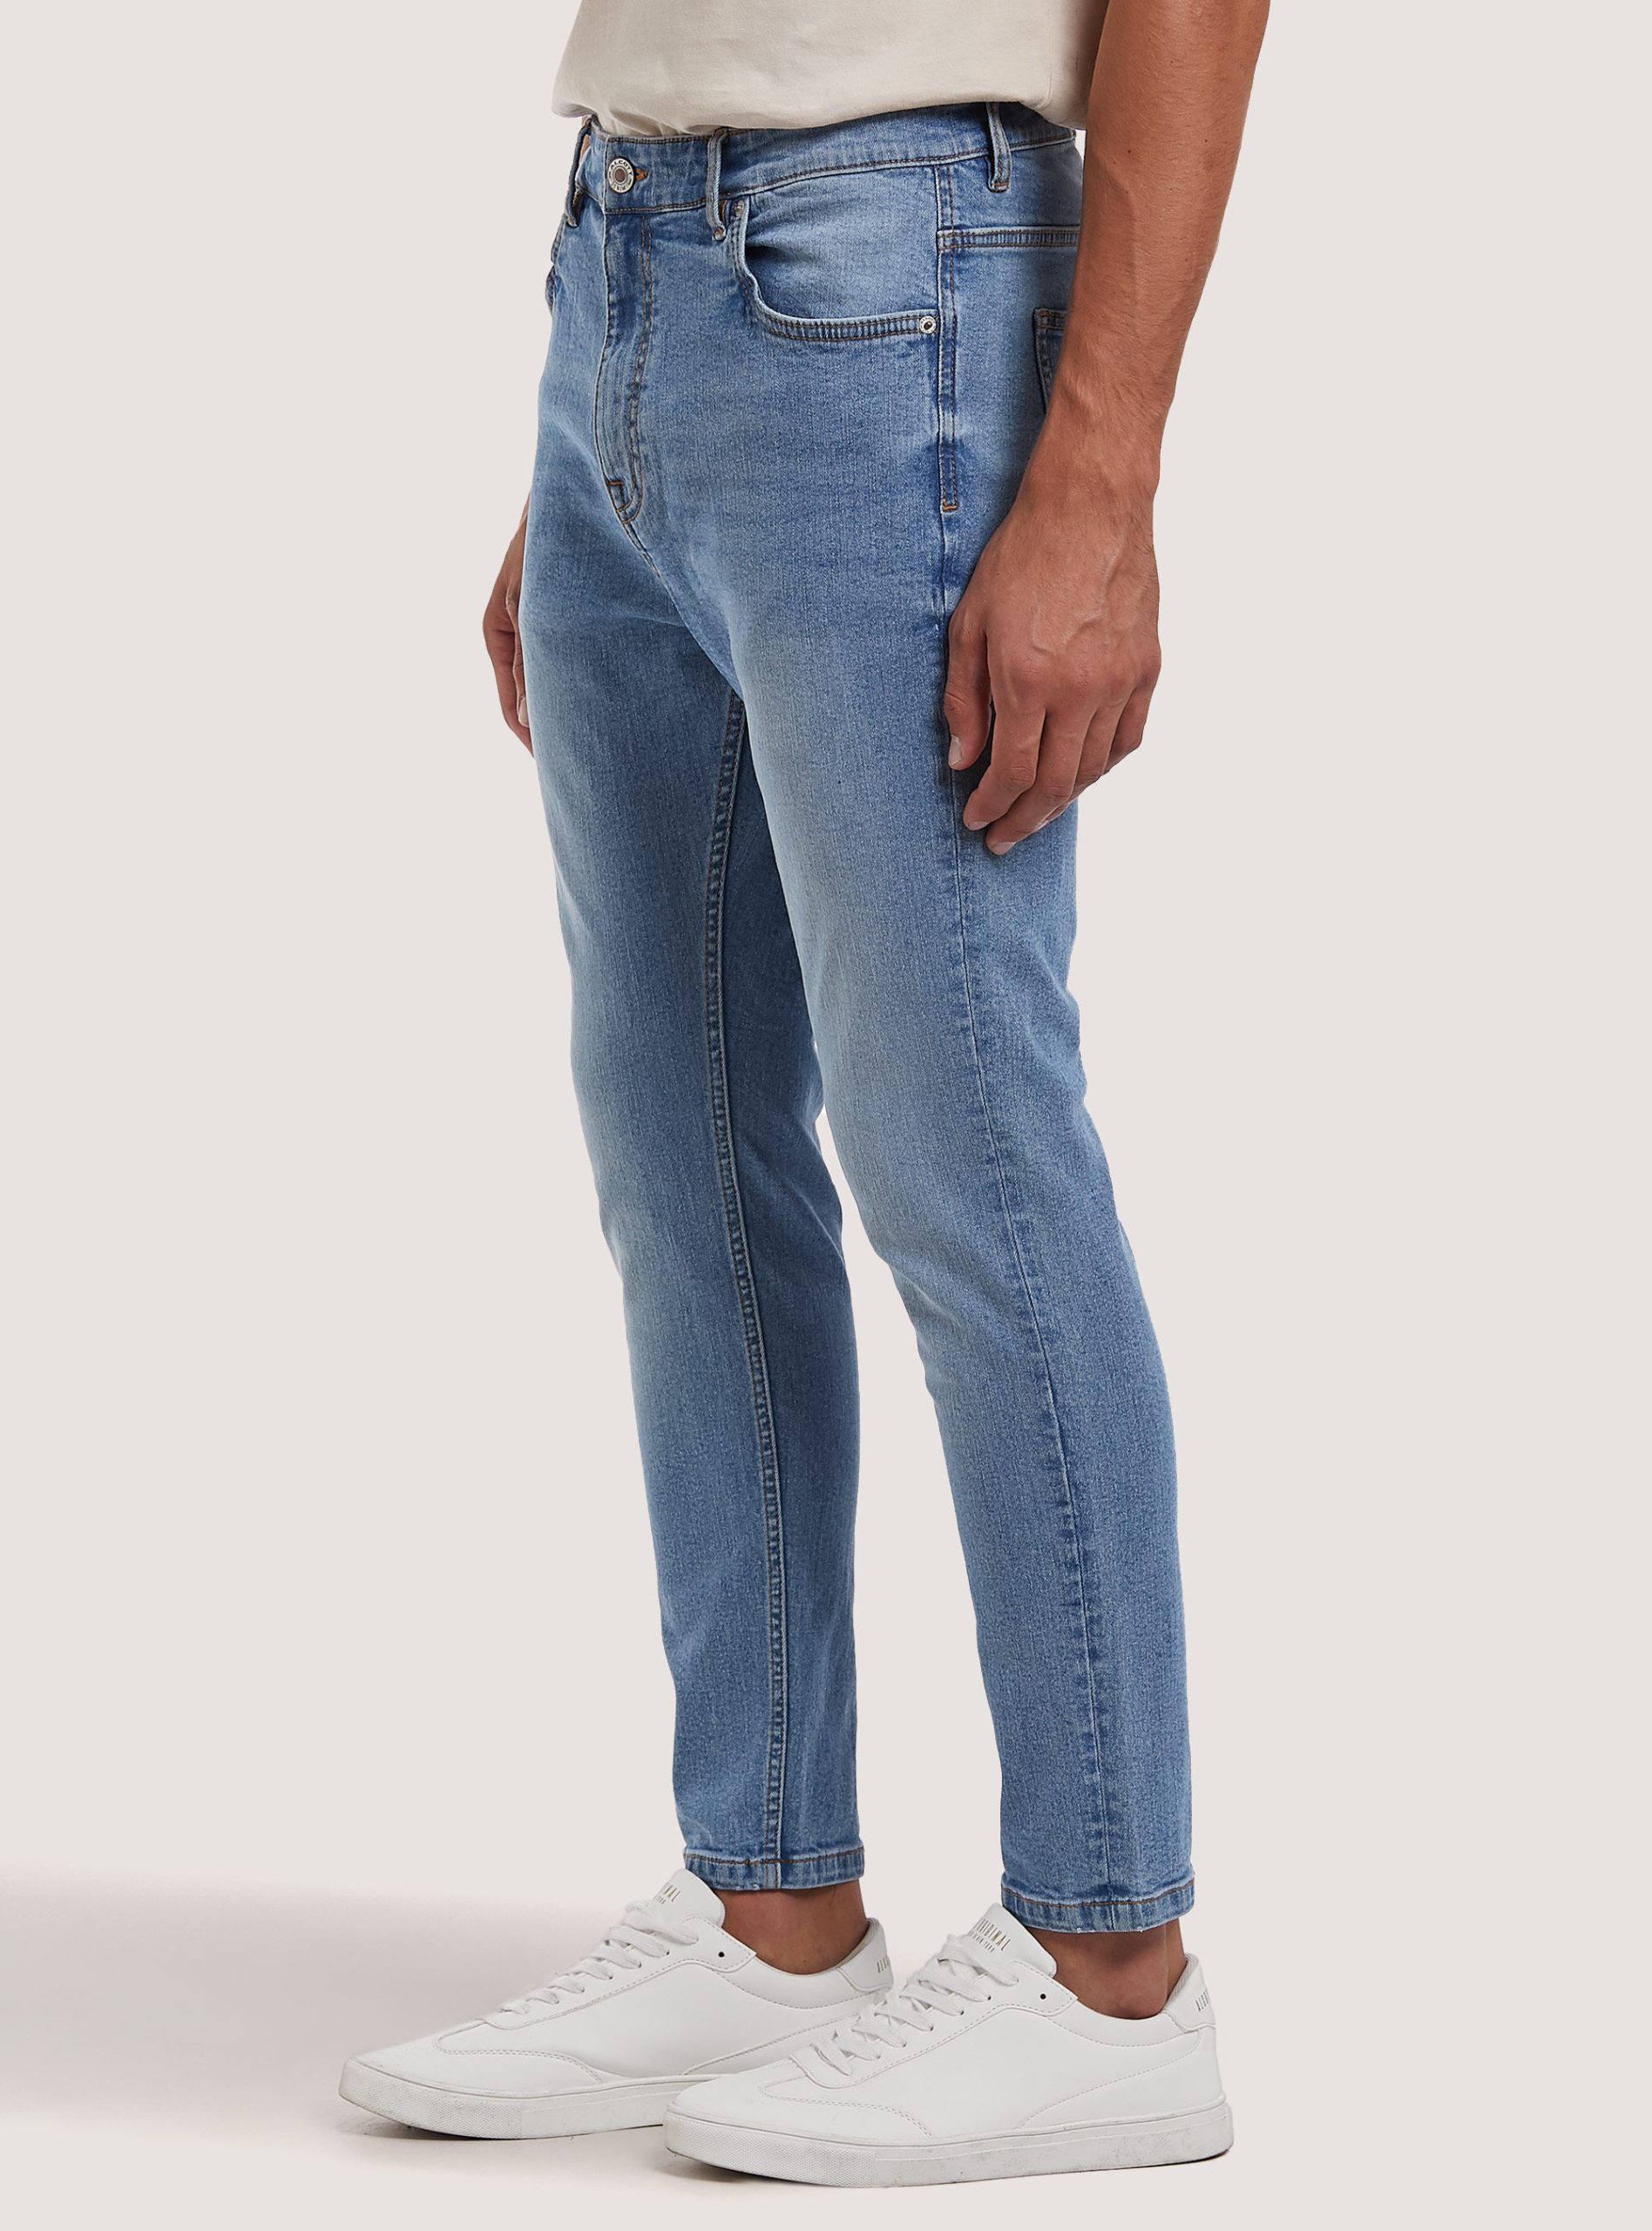 D007 Light Azure Männer Robustheit Alcott Jeans Stretch Denim Carrot Fit Jeans – 2